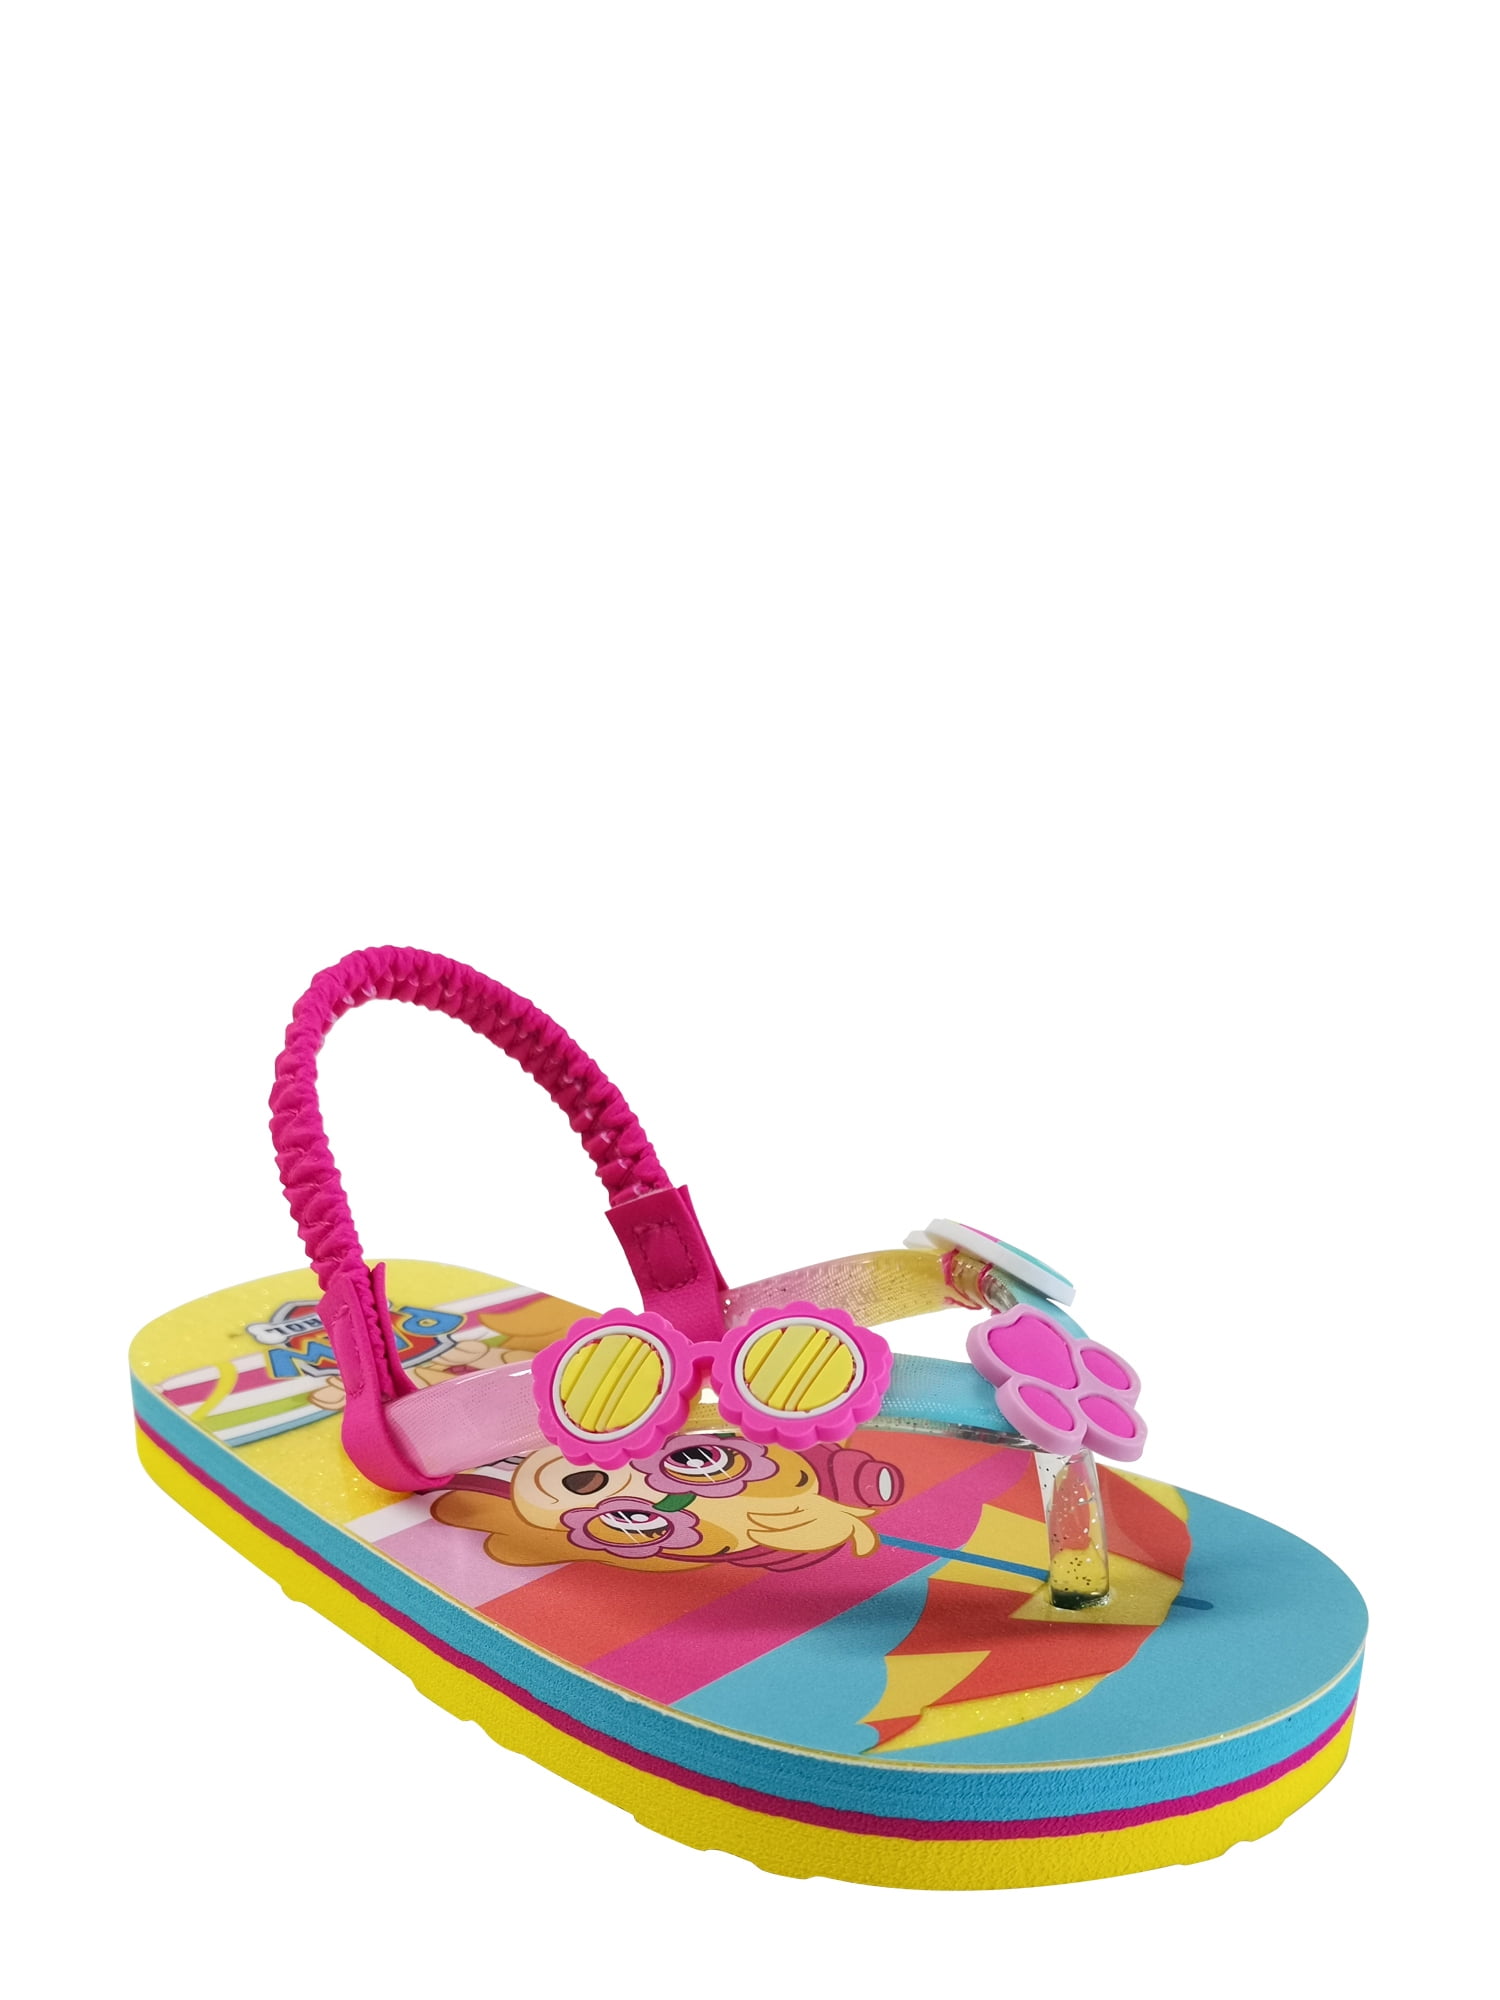 18months to 6years Nickelodeon® Paw Patrol Boys Flip Flops Sandals UK Sizes 